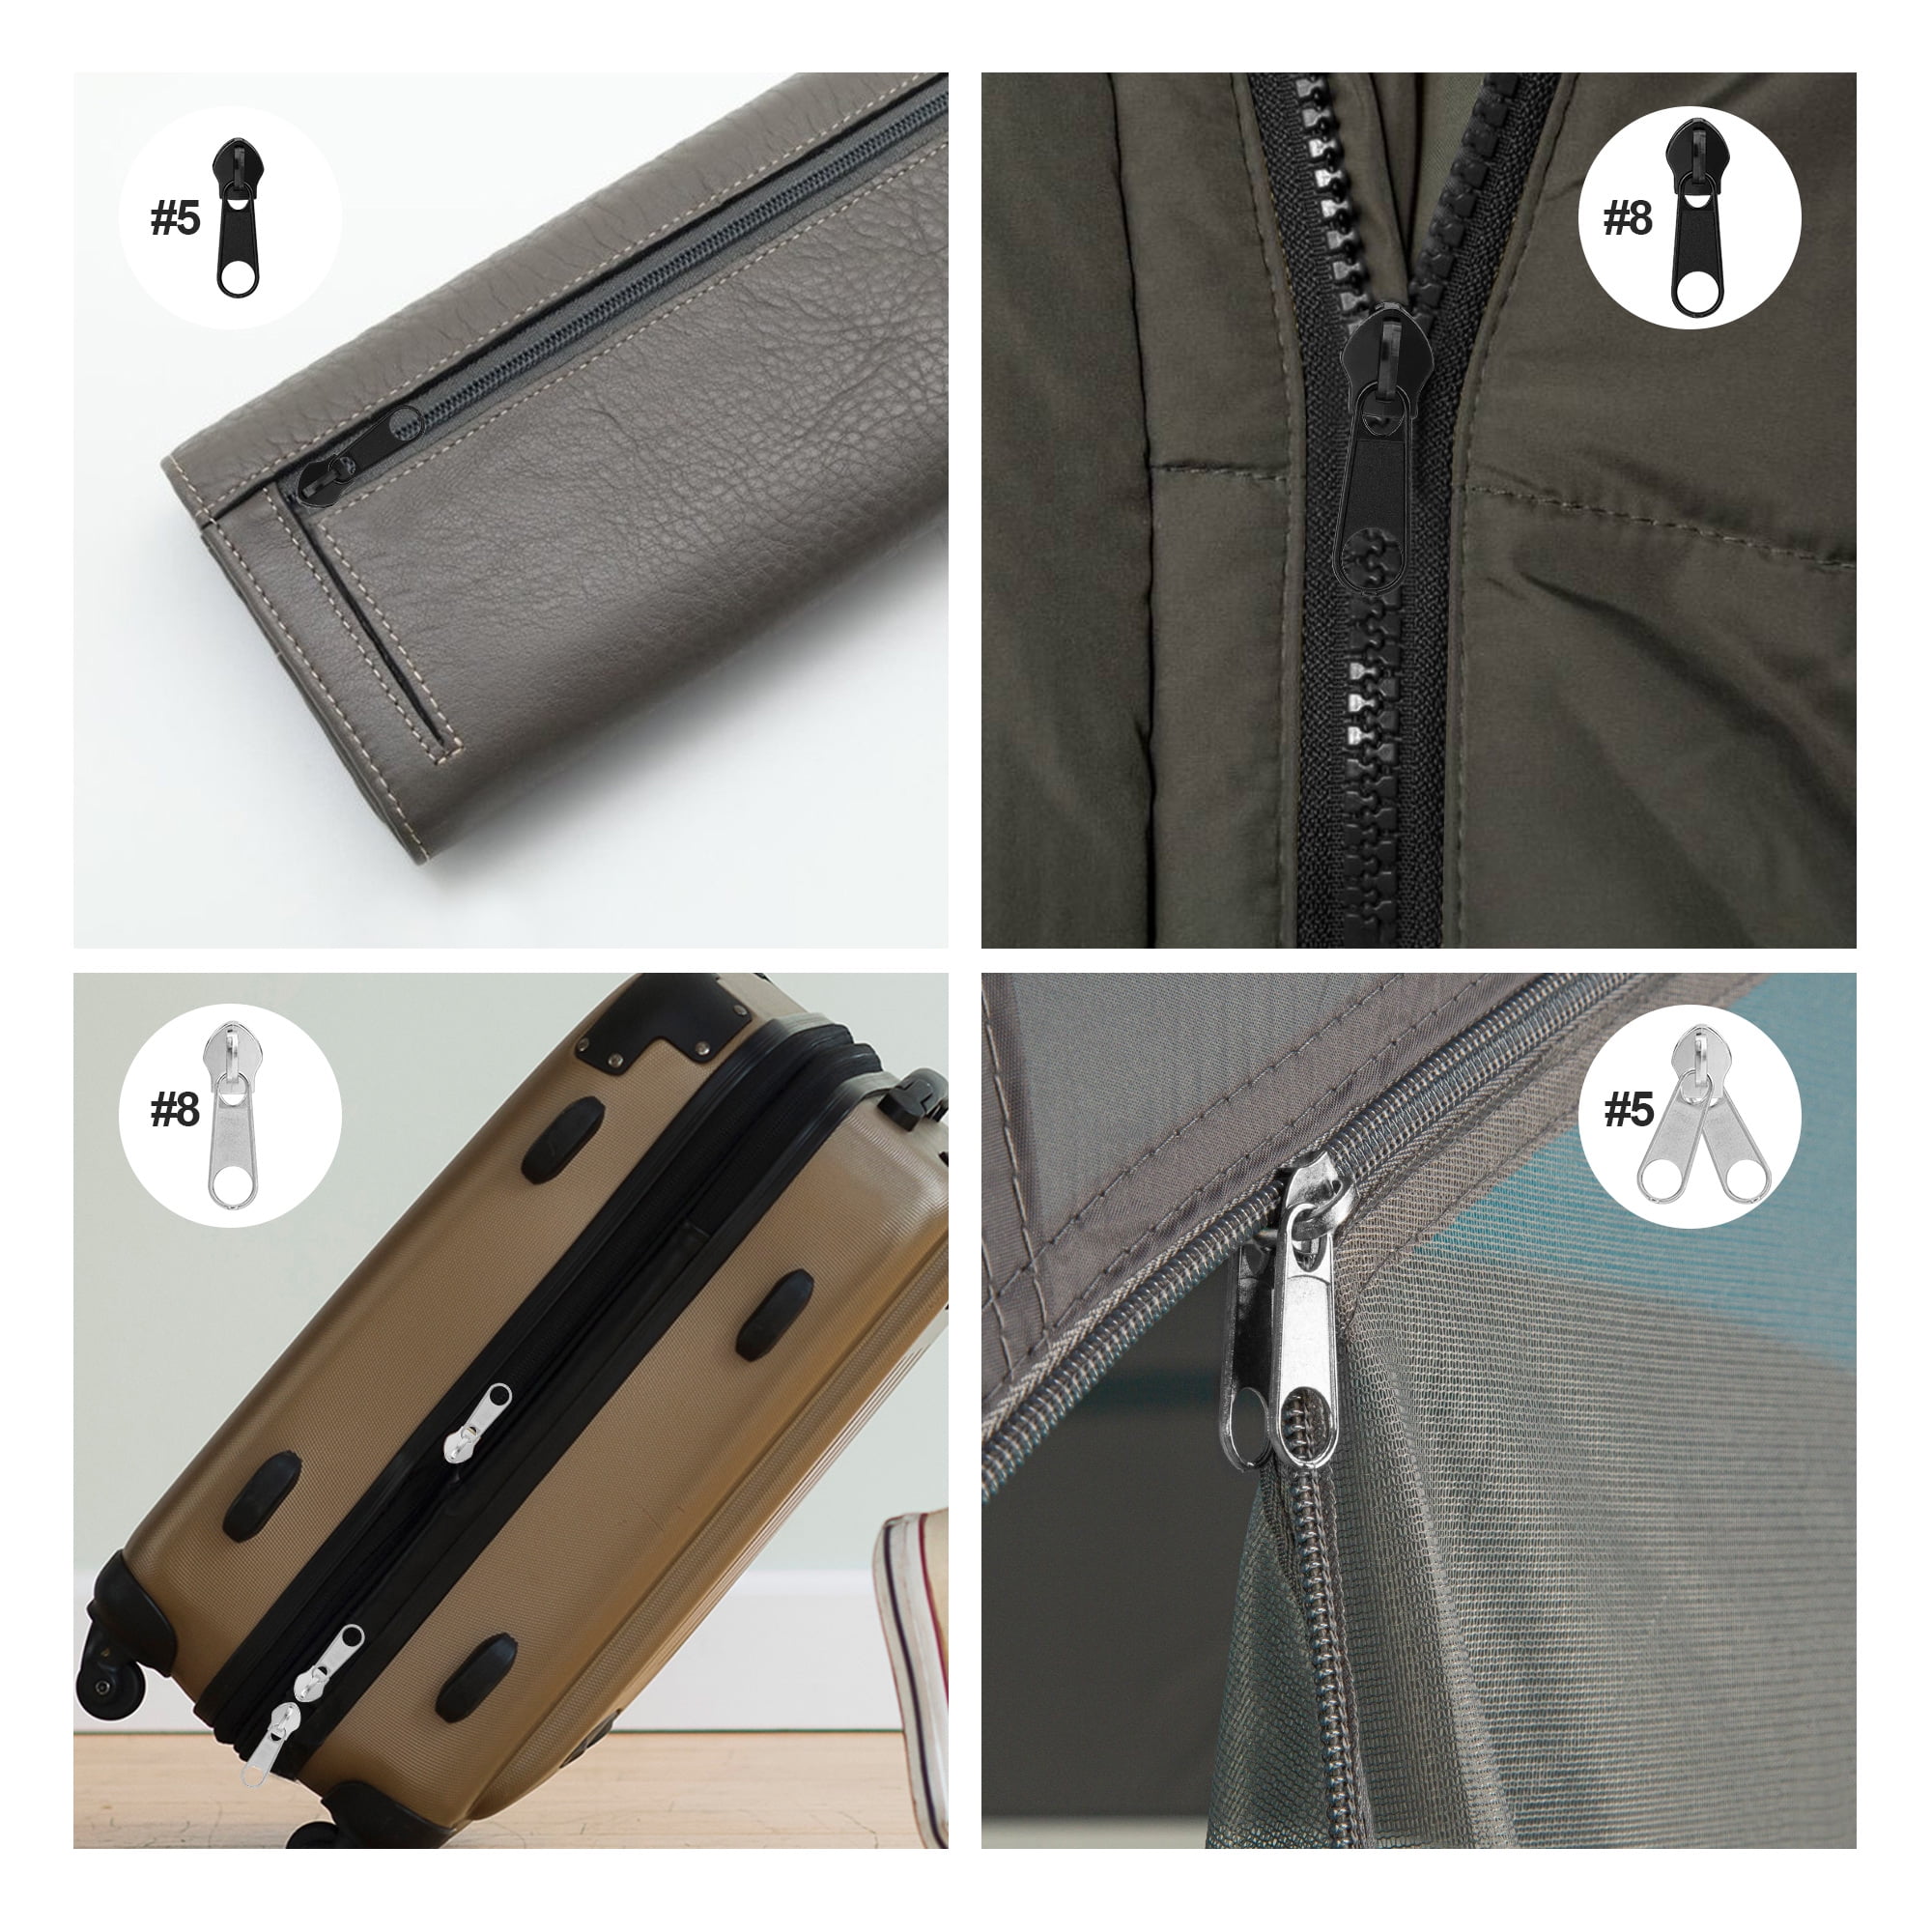 Workhe 194pcs/Bag Zipper Repair Kit Zip Slider Universal clothes